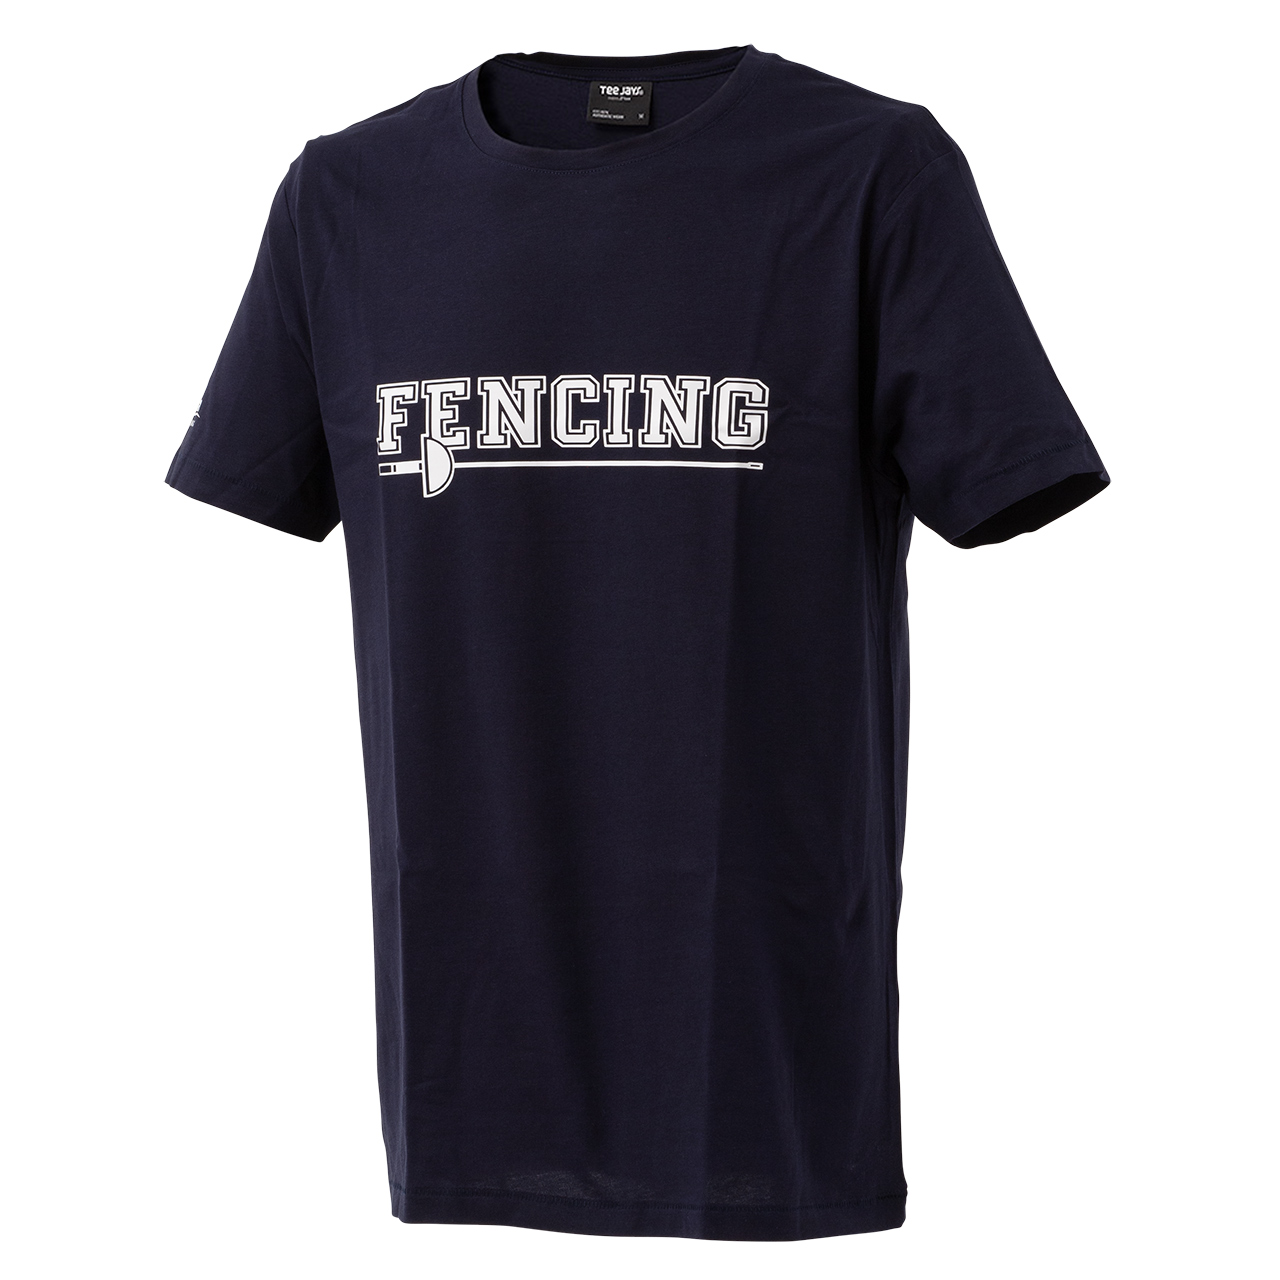 T-shirt "Fencing", navy blue